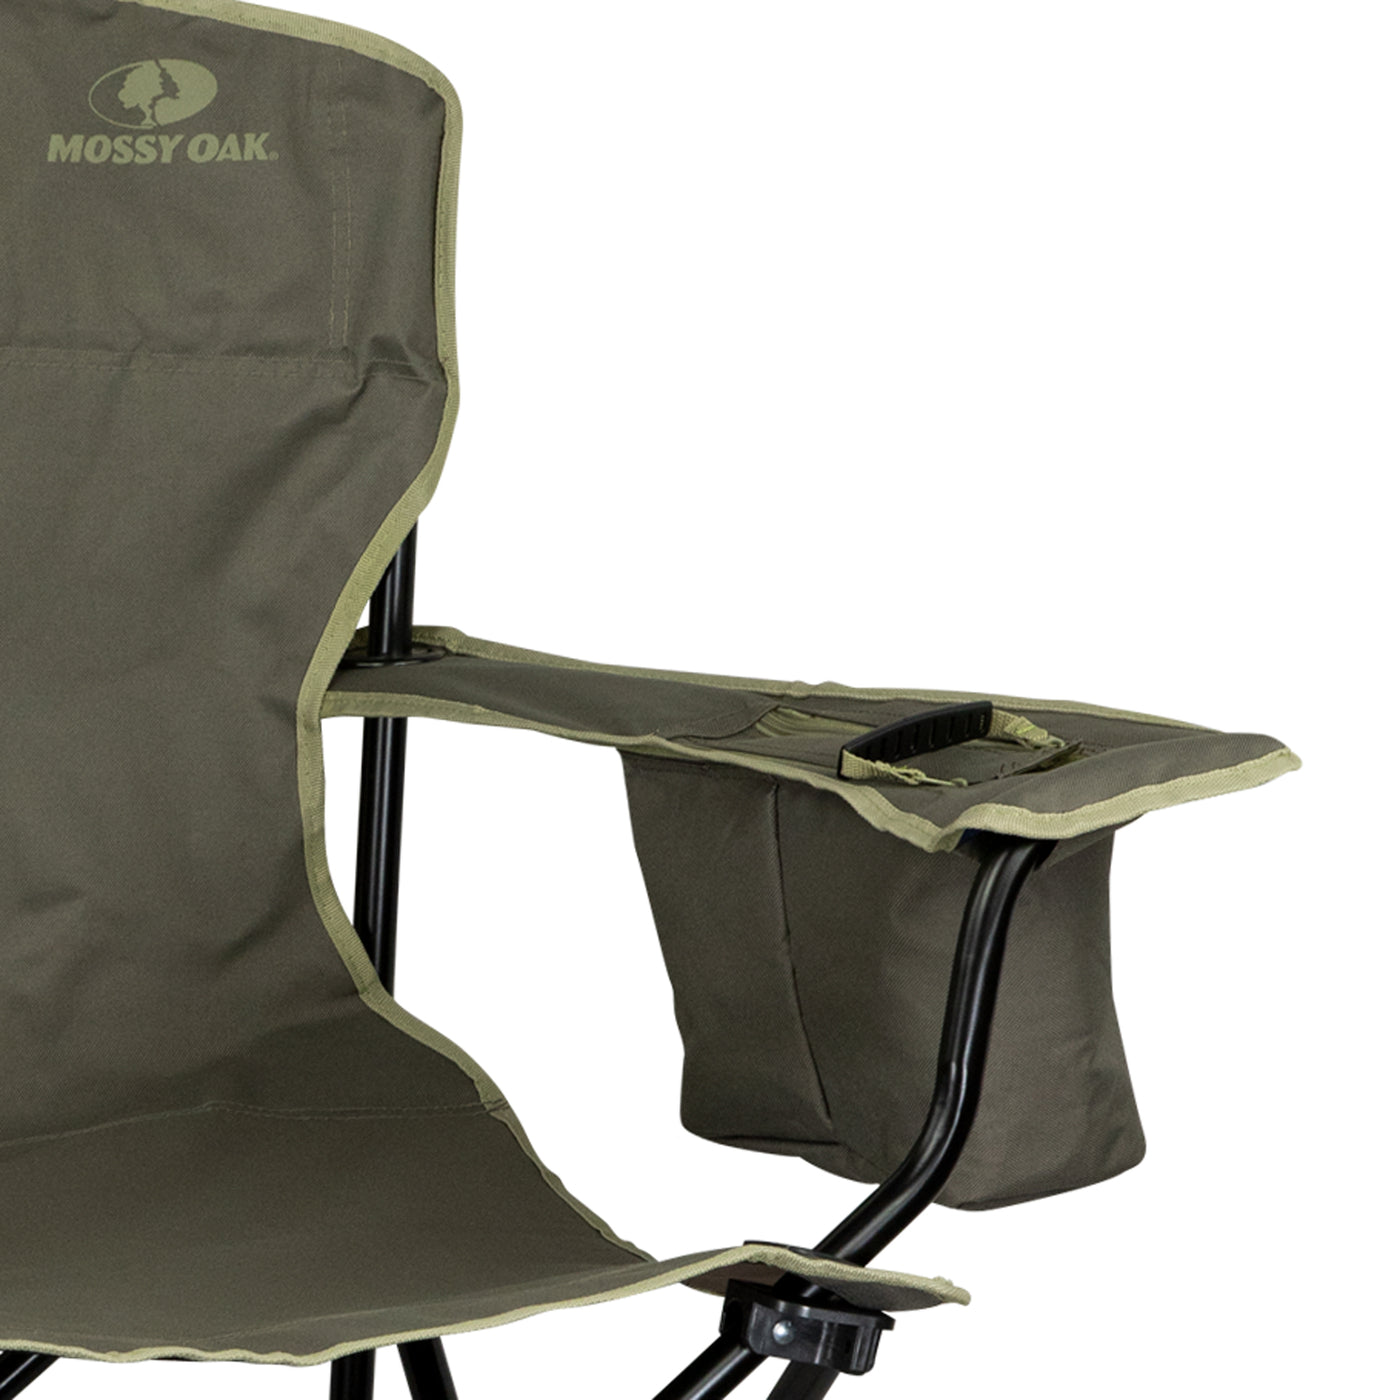 Mossy Oak Deluxe Folding Camping Chair – The Mossy Oak Store